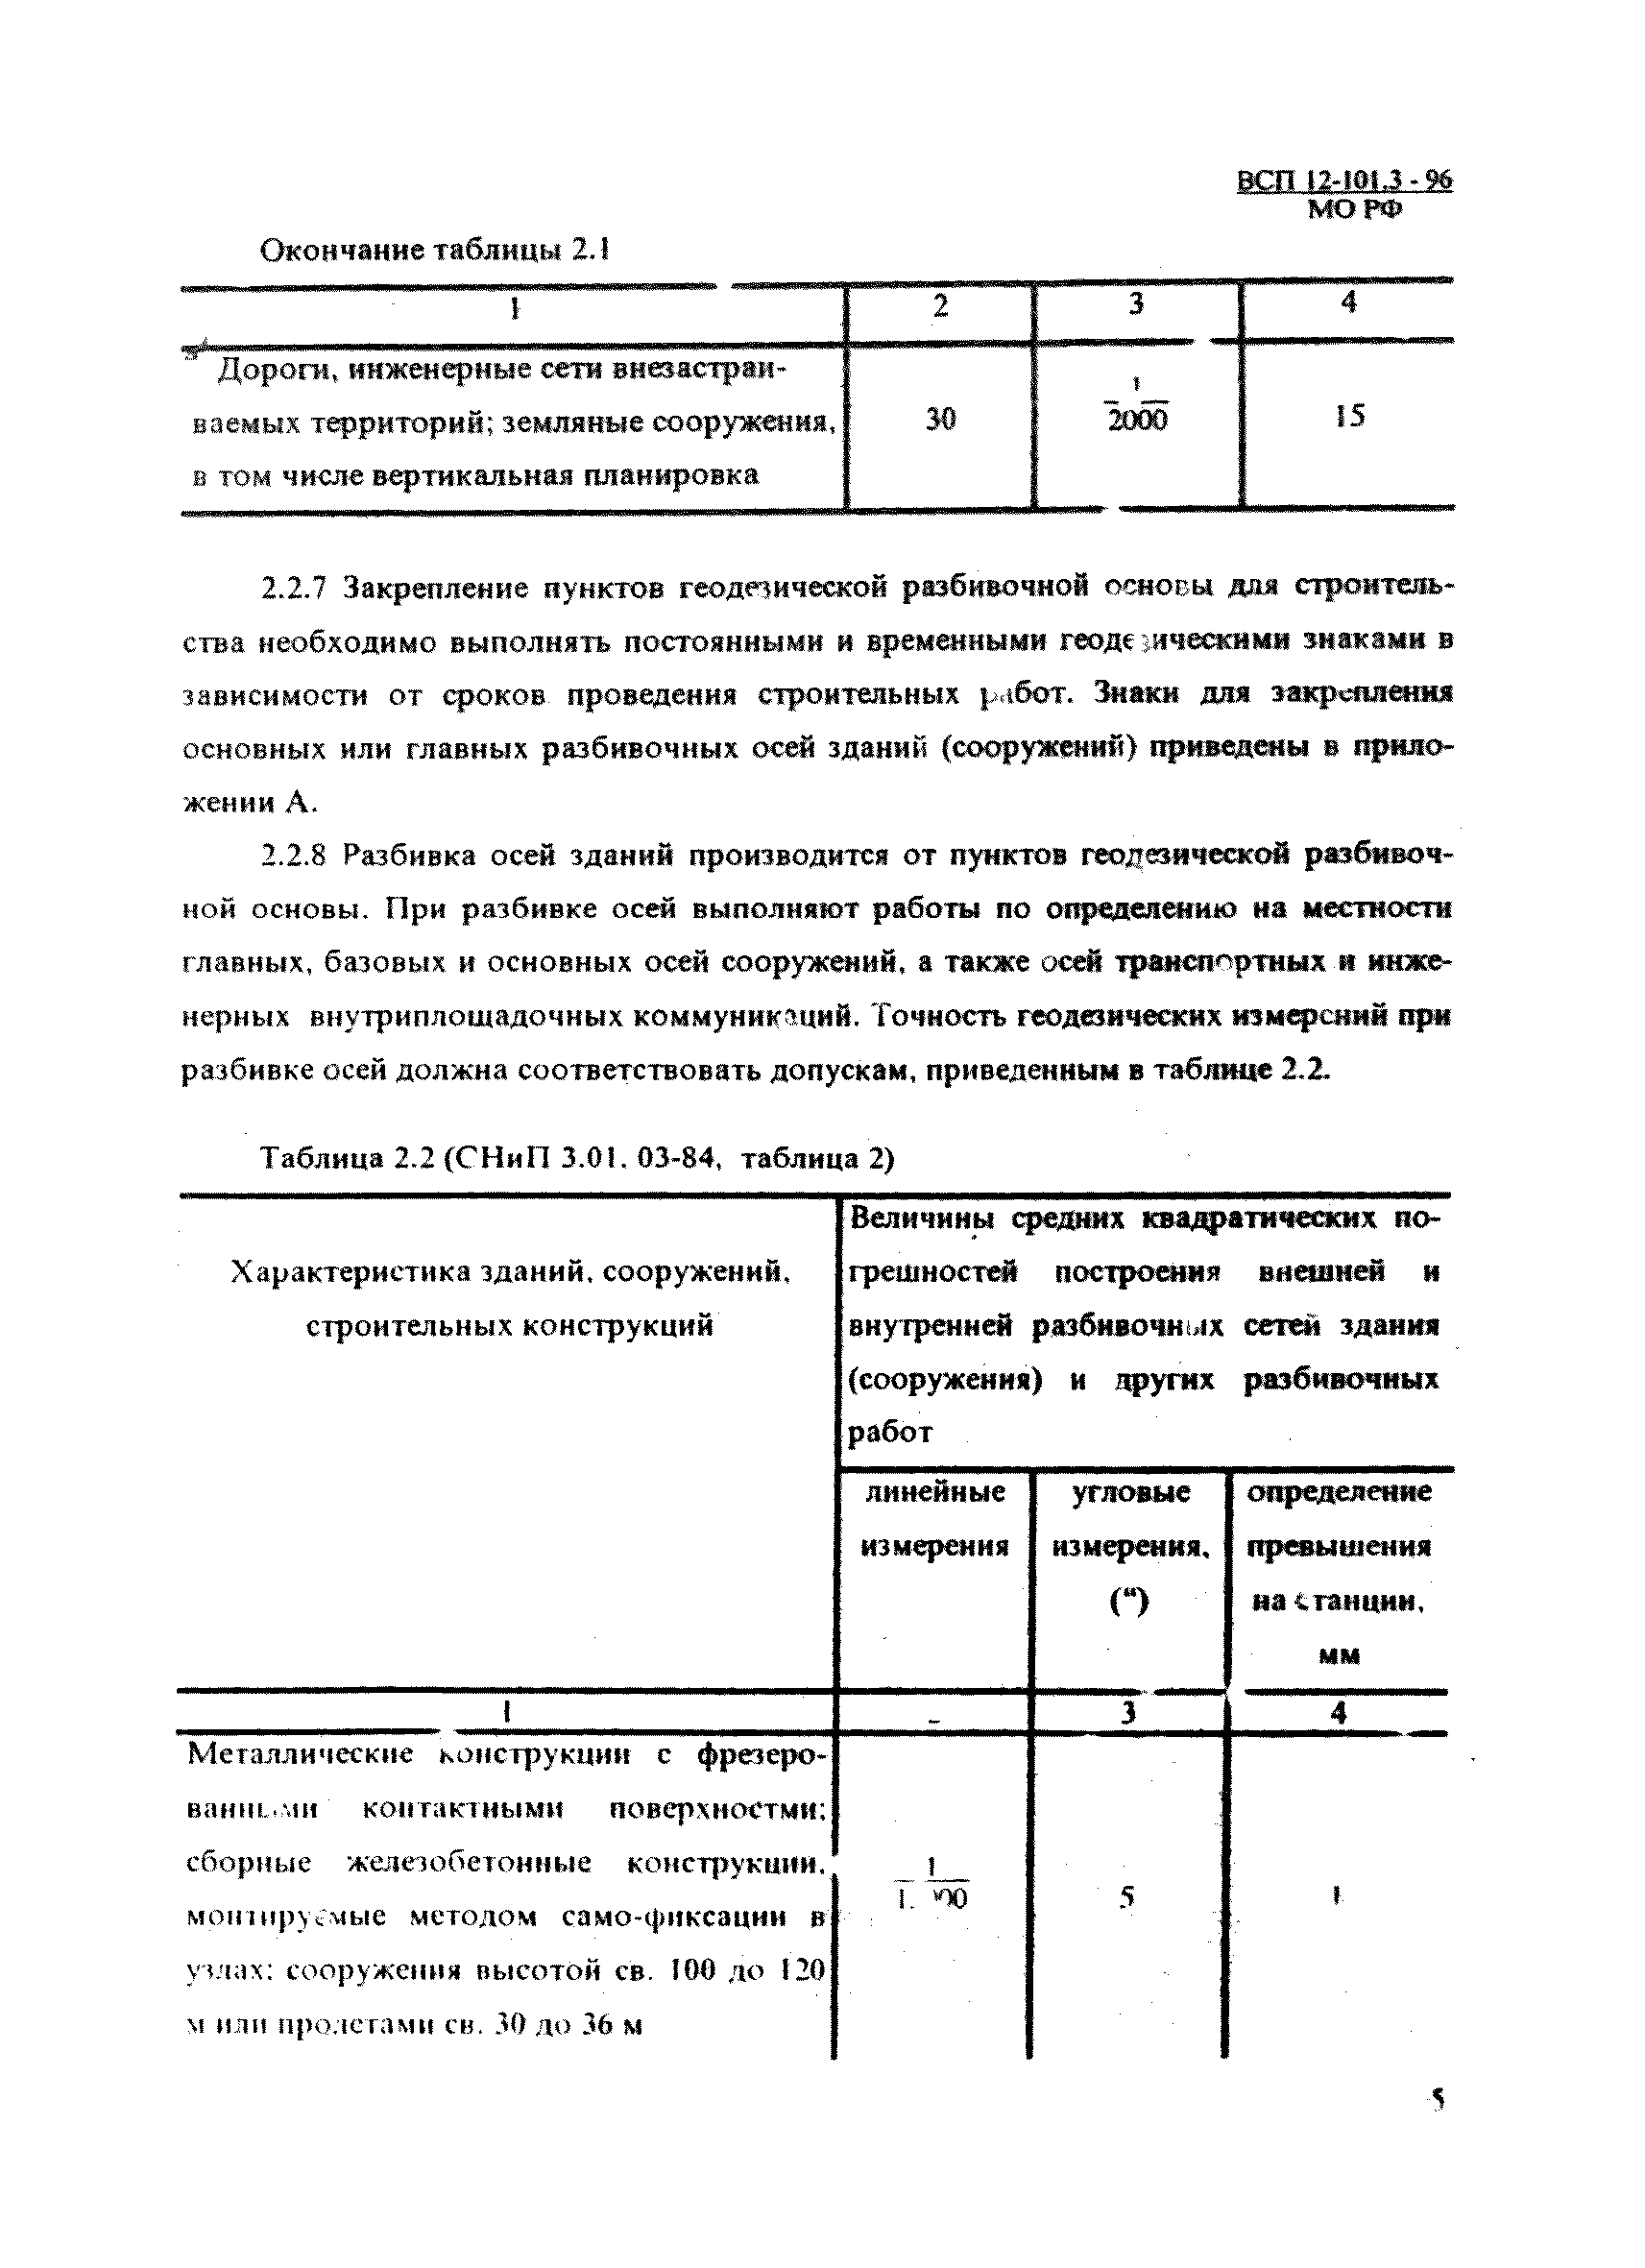 ВСП 12-101.3-96/МО РФ